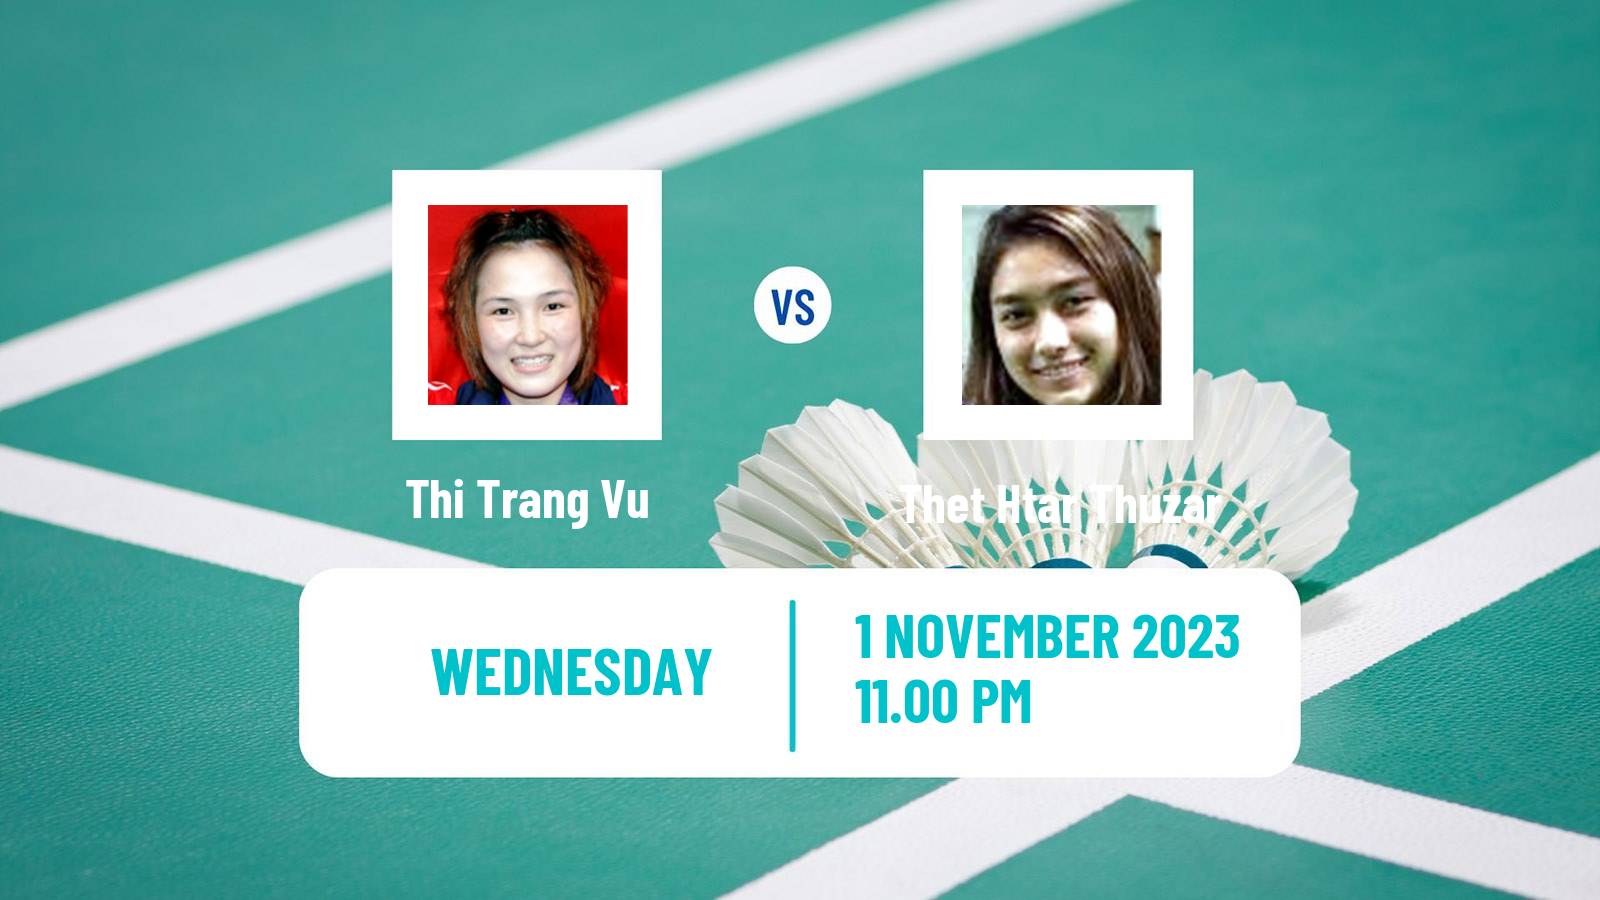 Badminton BWF World Tour Kl Masters Malaysia Super 100 Women Thi Trang Vu - Thet Htar Thuzar